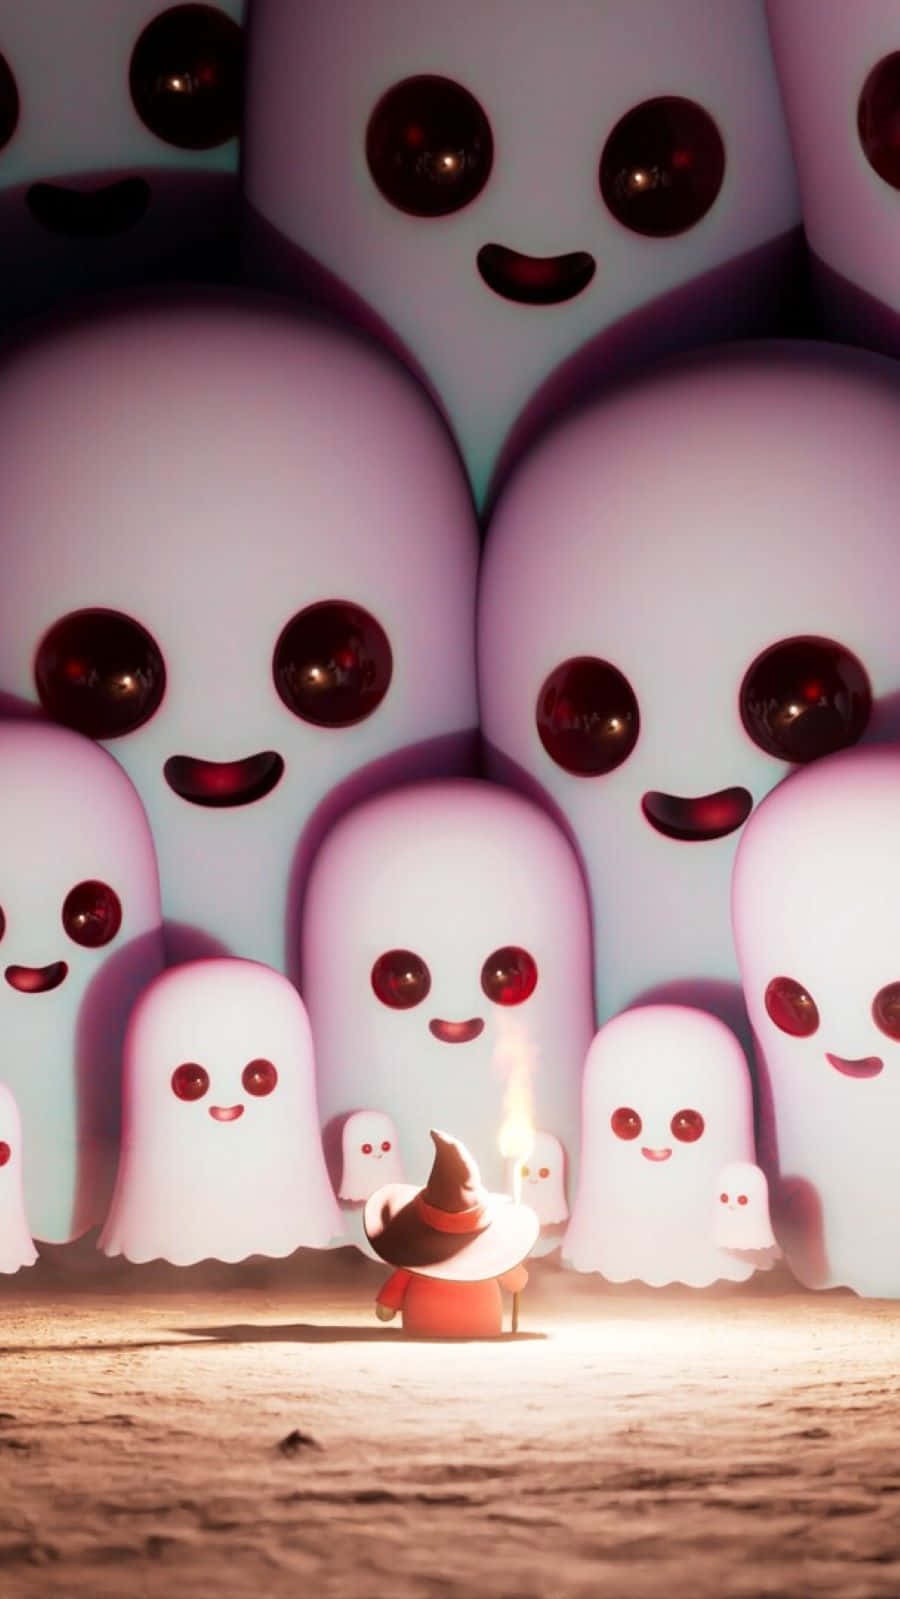 Gatheringof Cute Ghost Characters Wallpaper